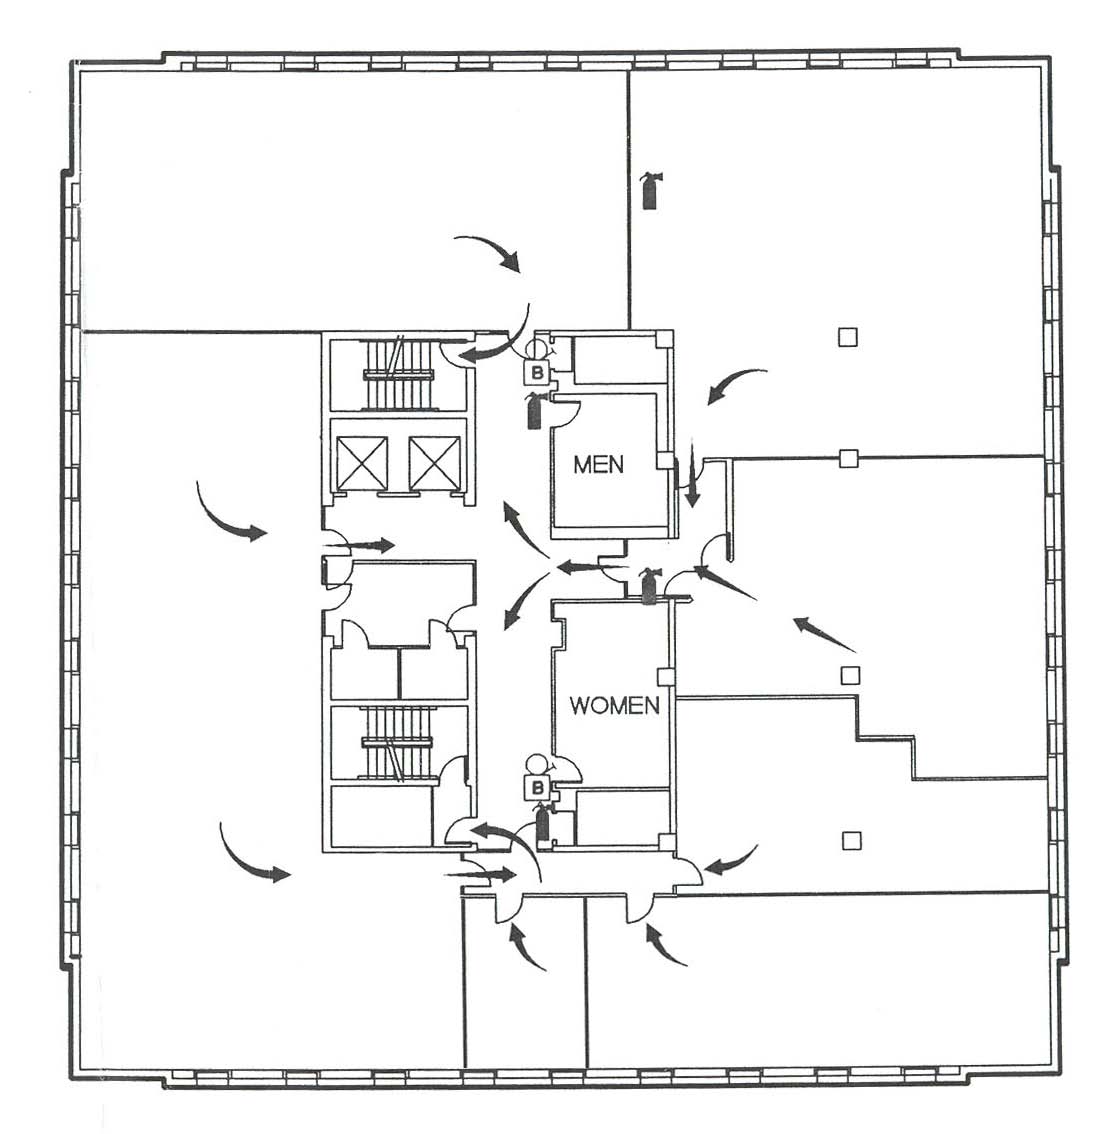 Mrak Hall Fourth Floor Plan